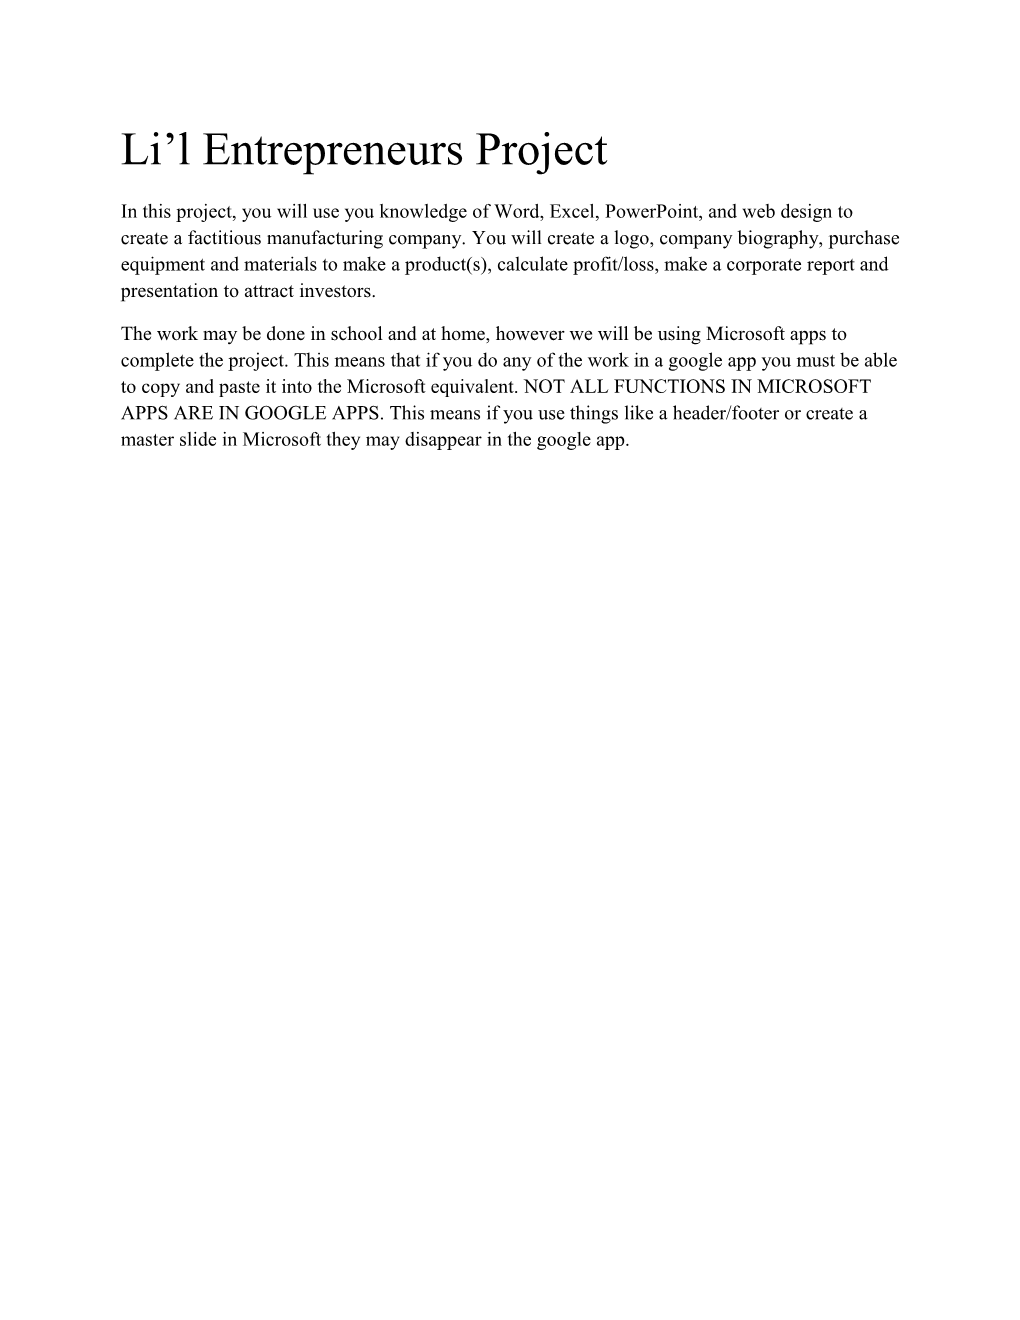 Li L Entrepreneurs Project